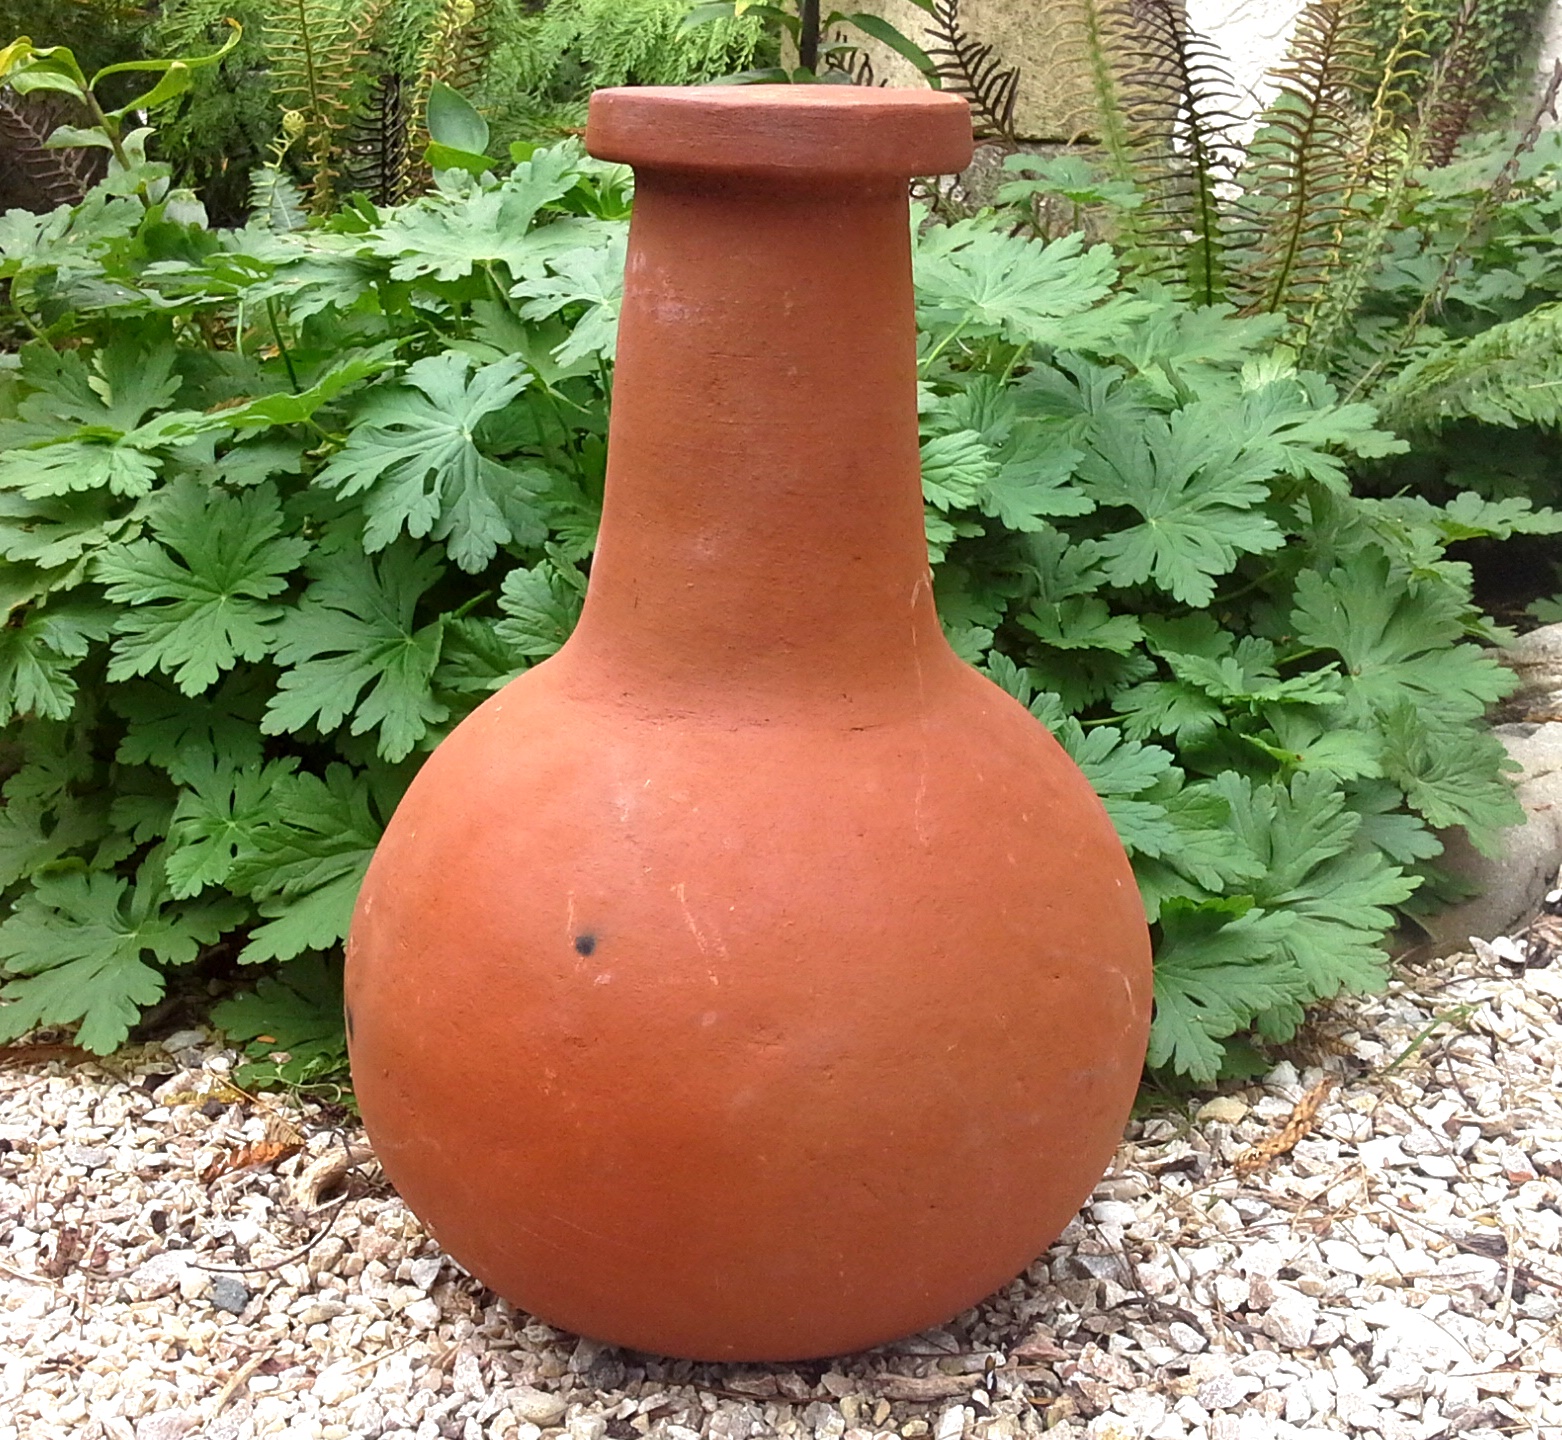 Clay olla irrigation pots